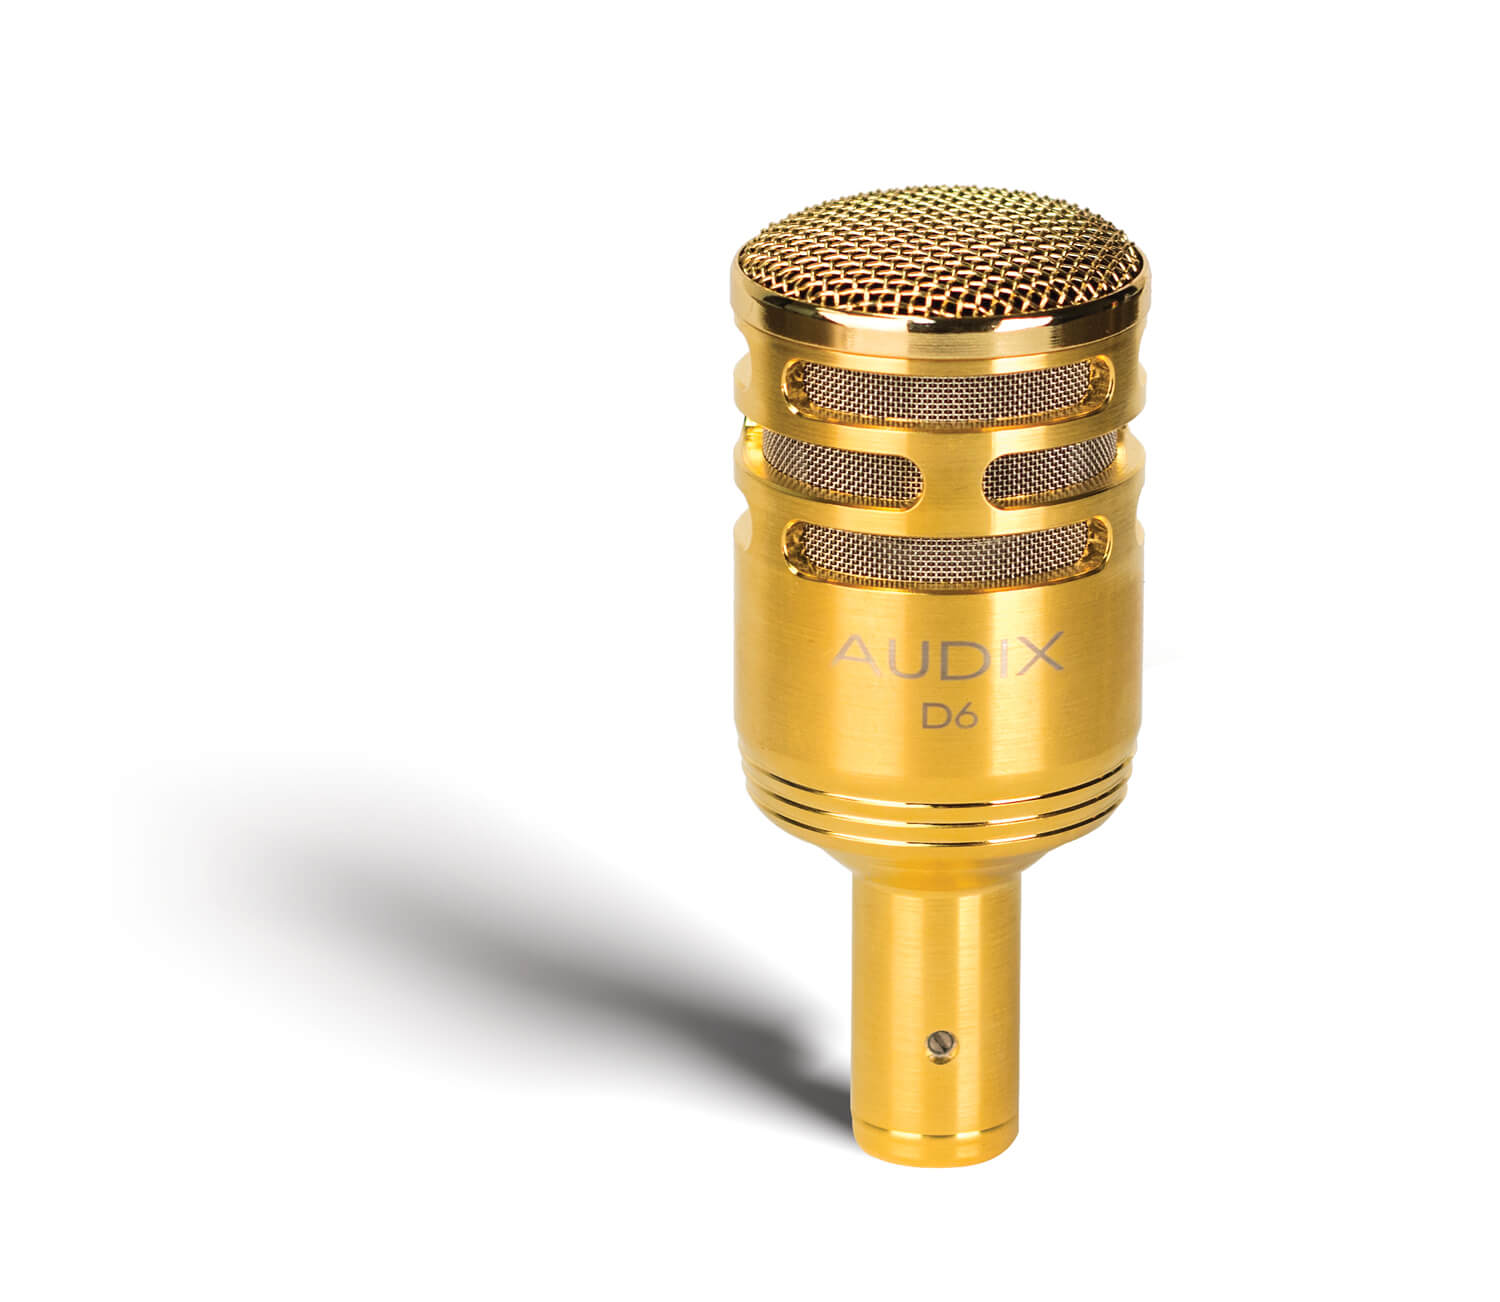 Audix Celebrates International Drum Month, Announces Giveaway of Gold D6 Drum Microphone